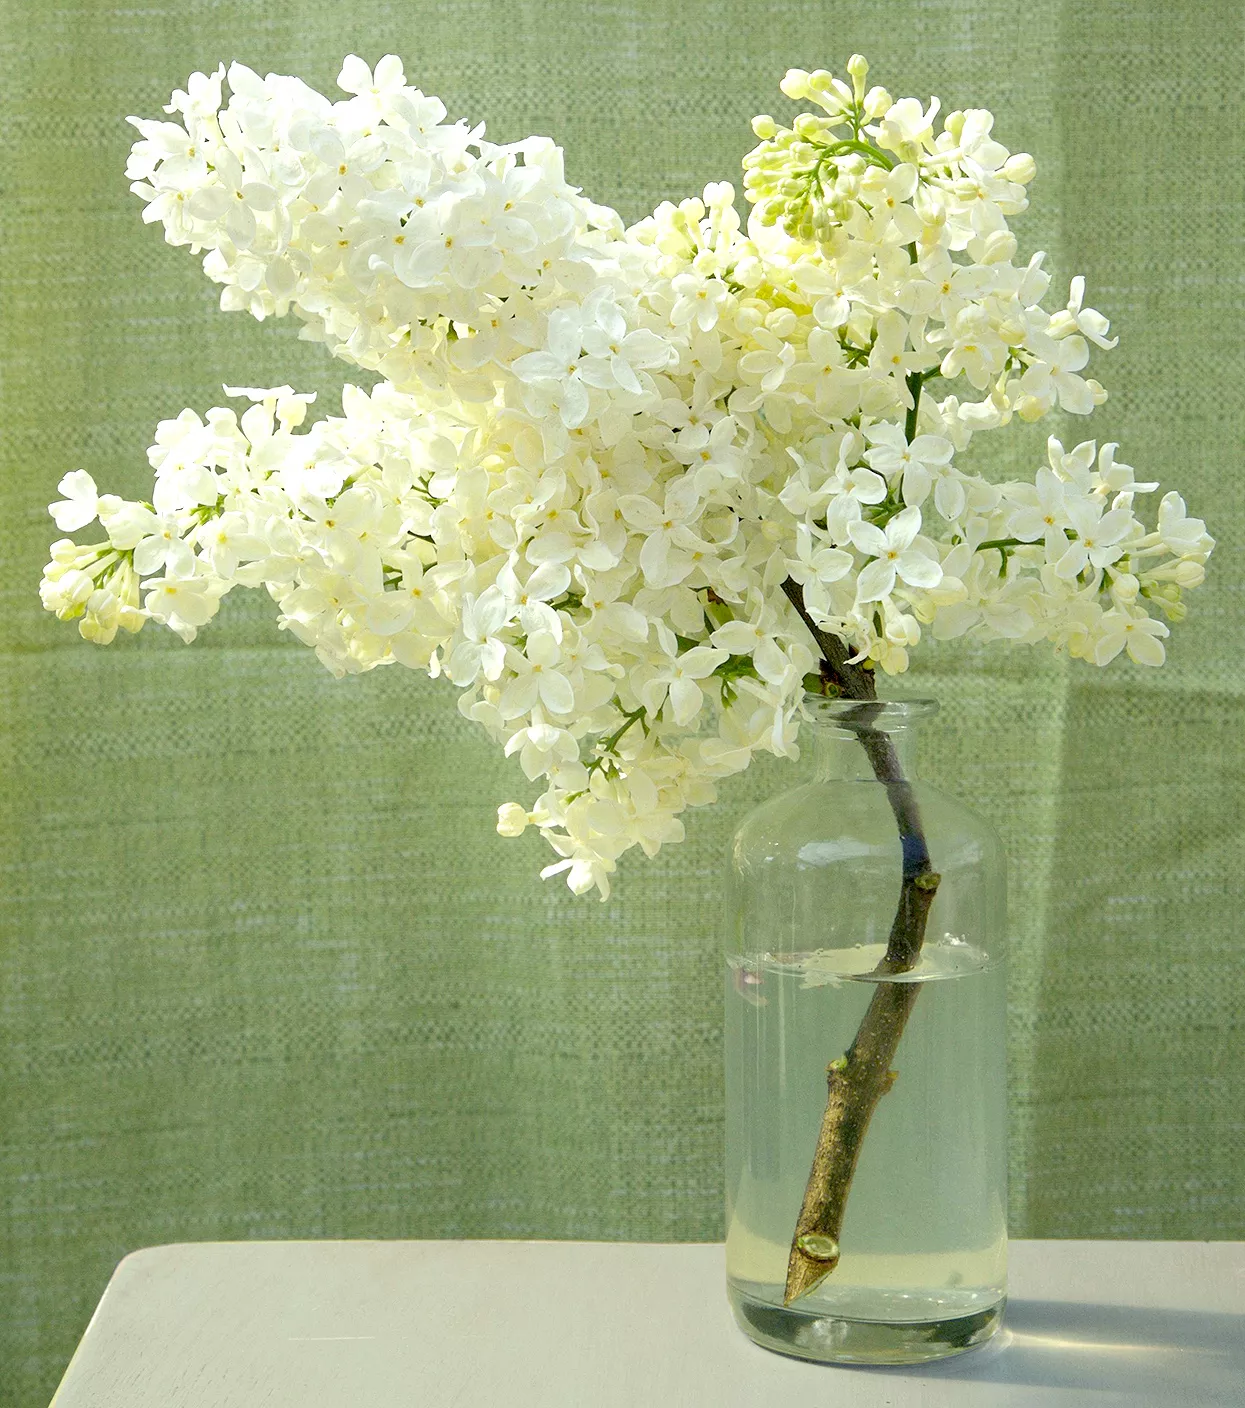 yellow Syringa 'Primrose' lilac cutting in vase